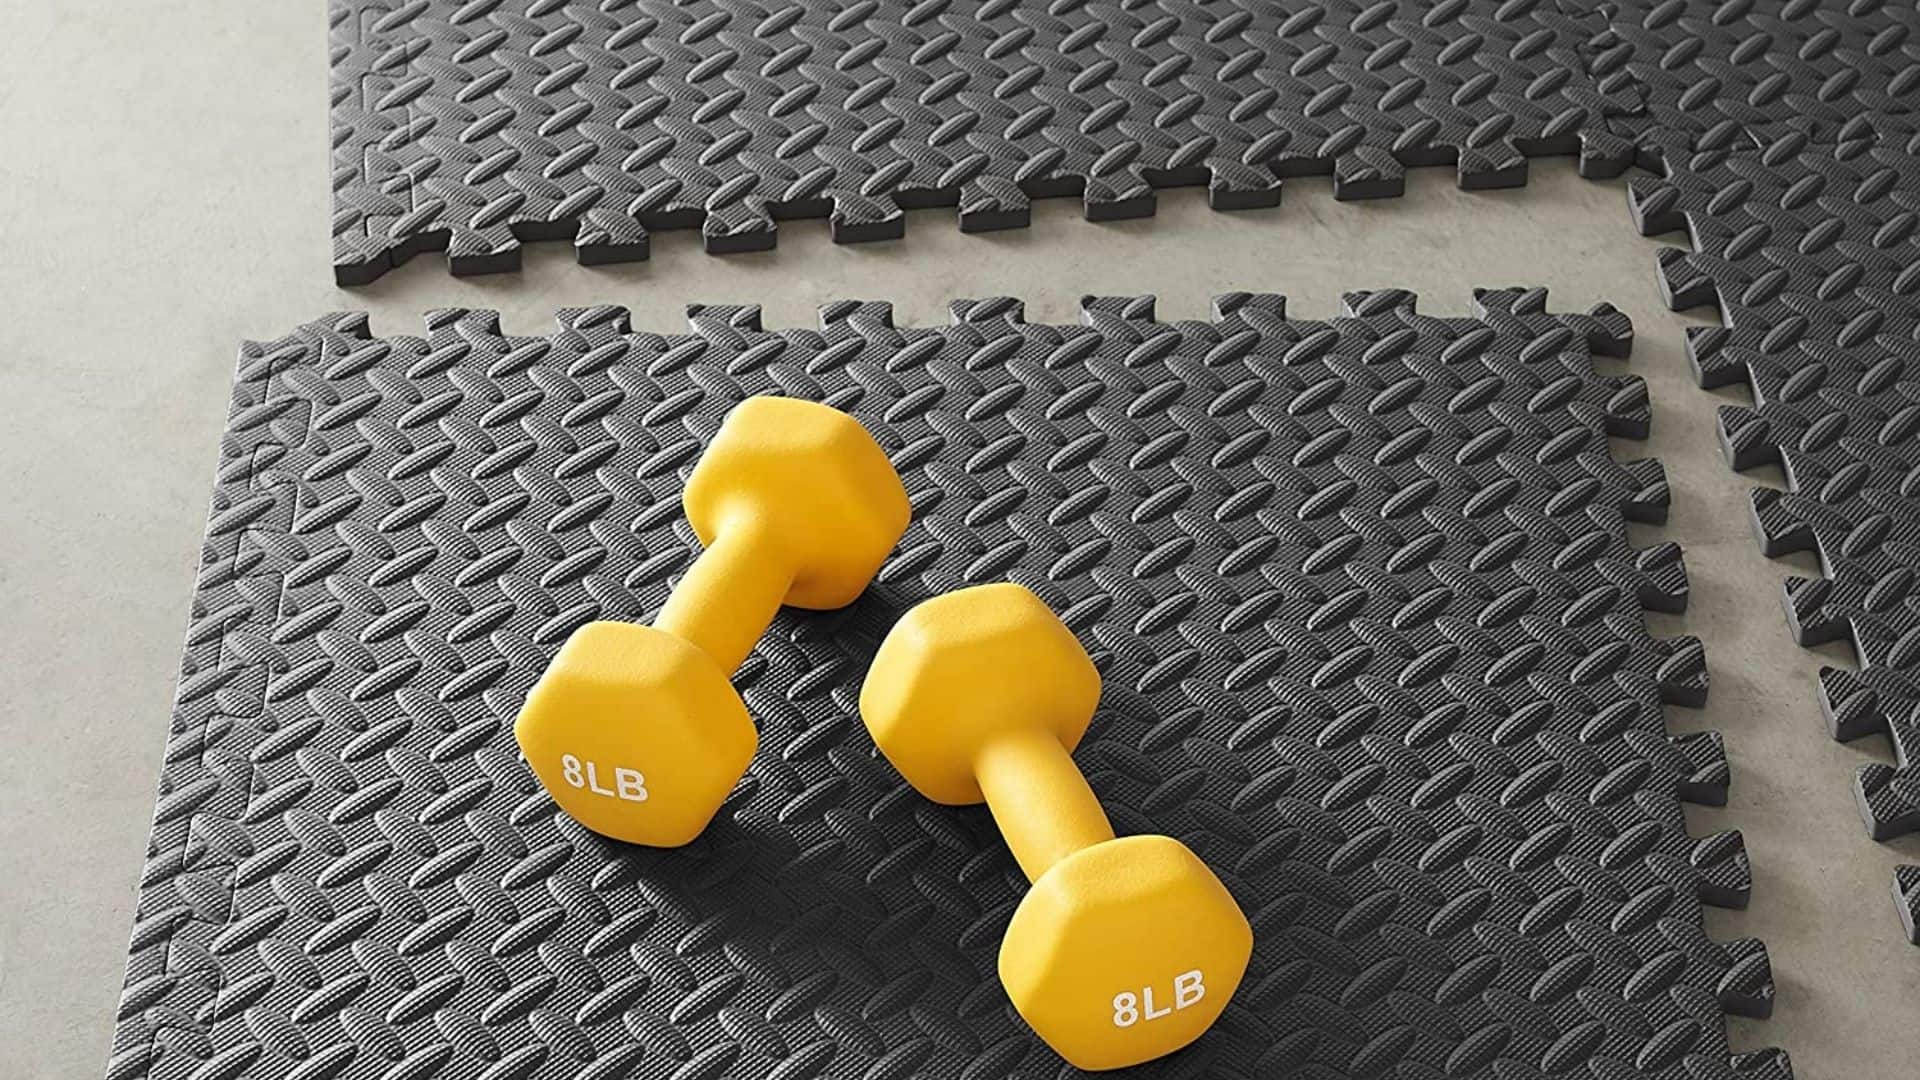 Amazon Basics Foam Interlocking Exercise Gym Floor Mat Tiles